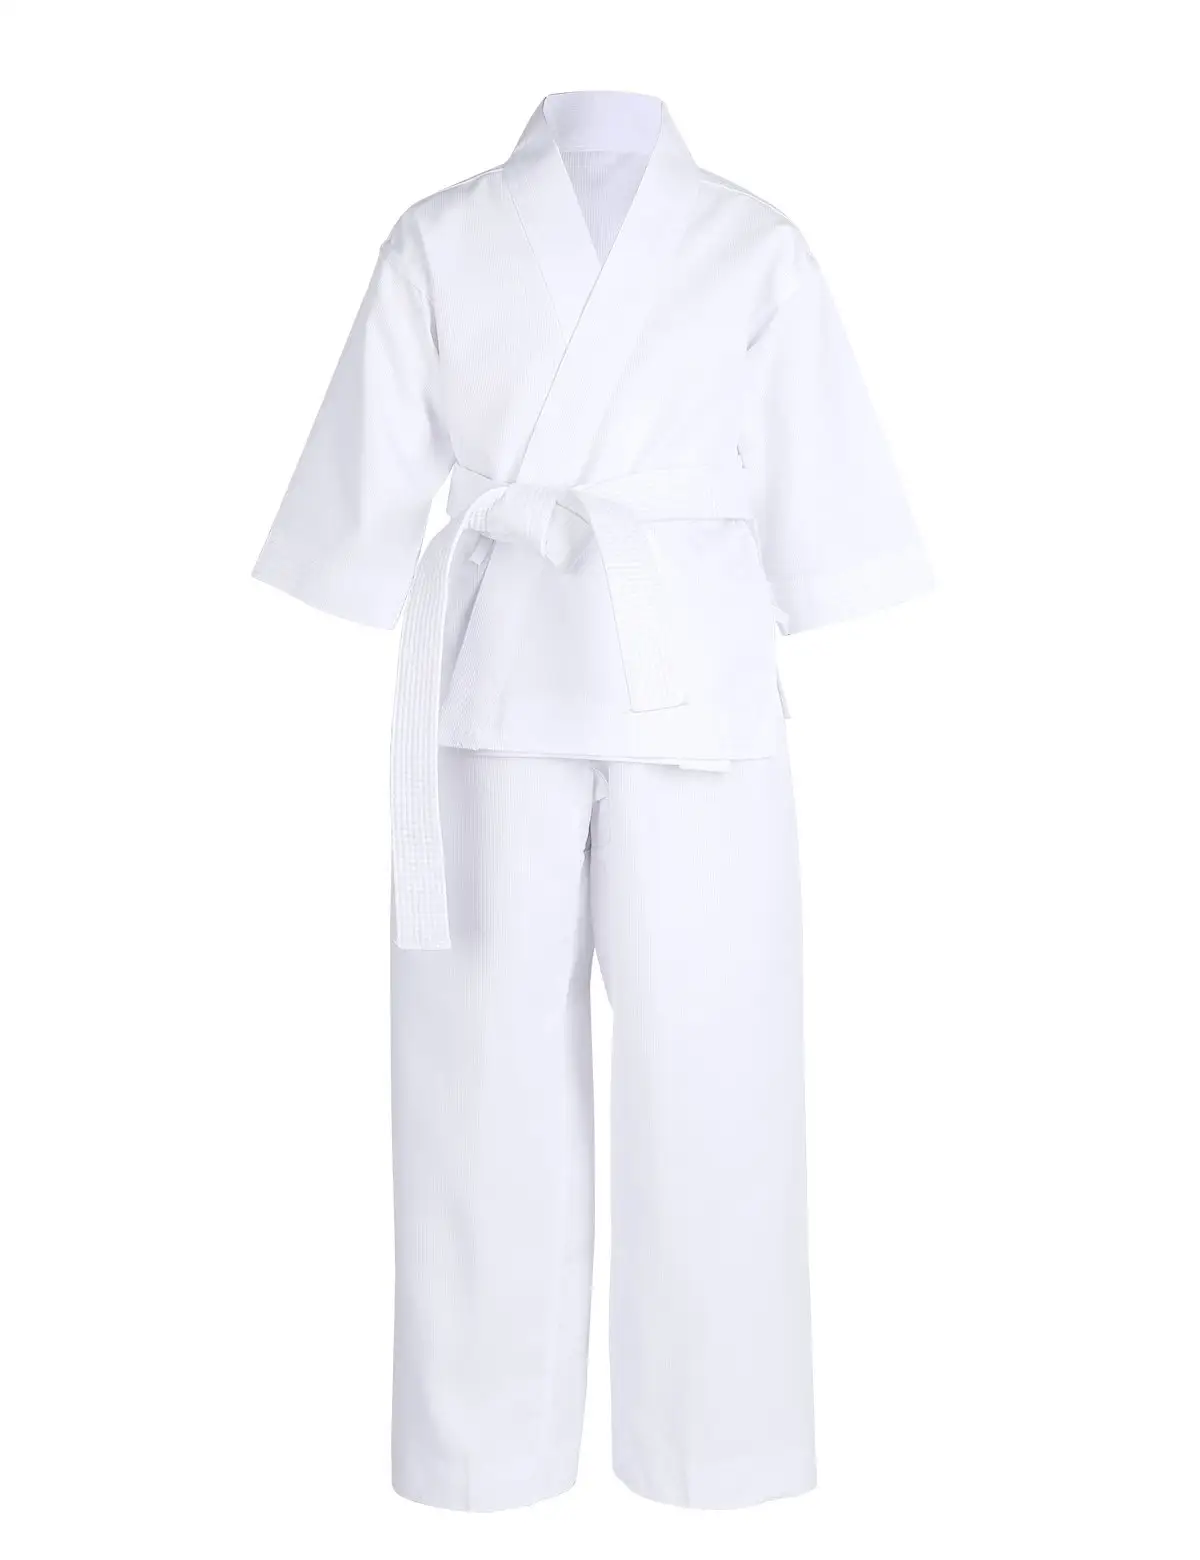 Taekwondo-Anzug Karate GI Karate-Anzug Damen-Gi für den Kampf leichte Karate-Anzug mit bequemem Gürtel